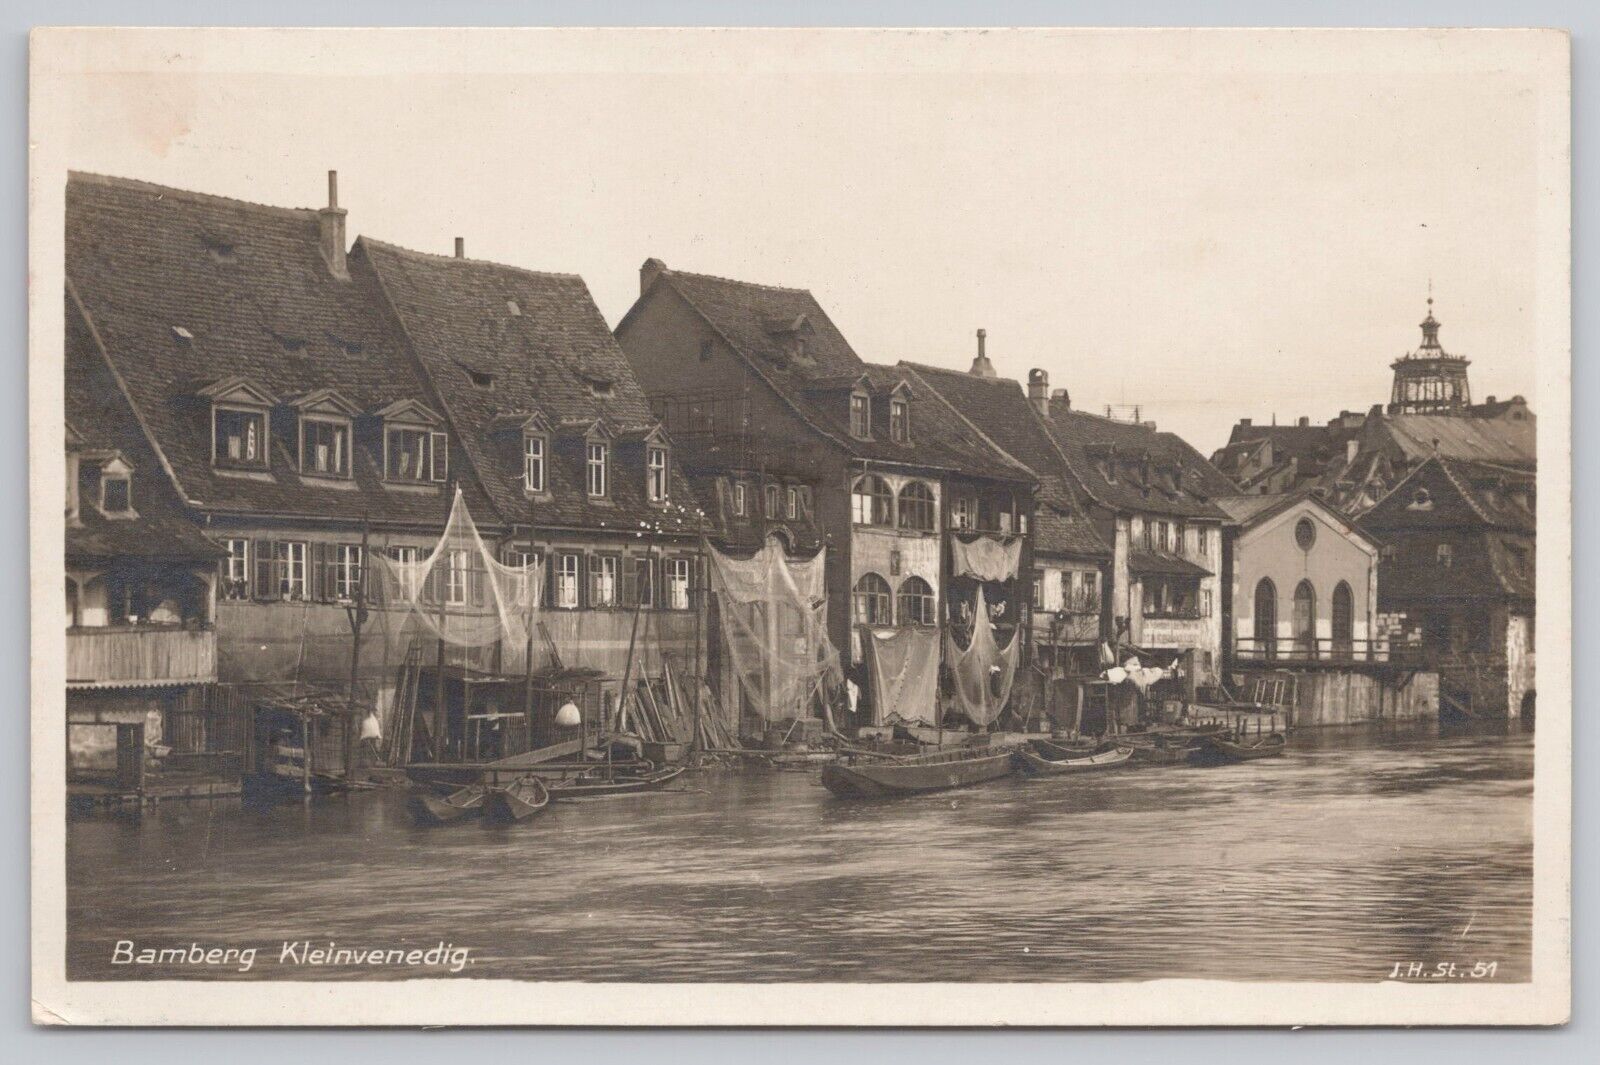 Bamberg Kleinvenedig Old Buildings & Boats Germany RPPC Real Photo Postcard